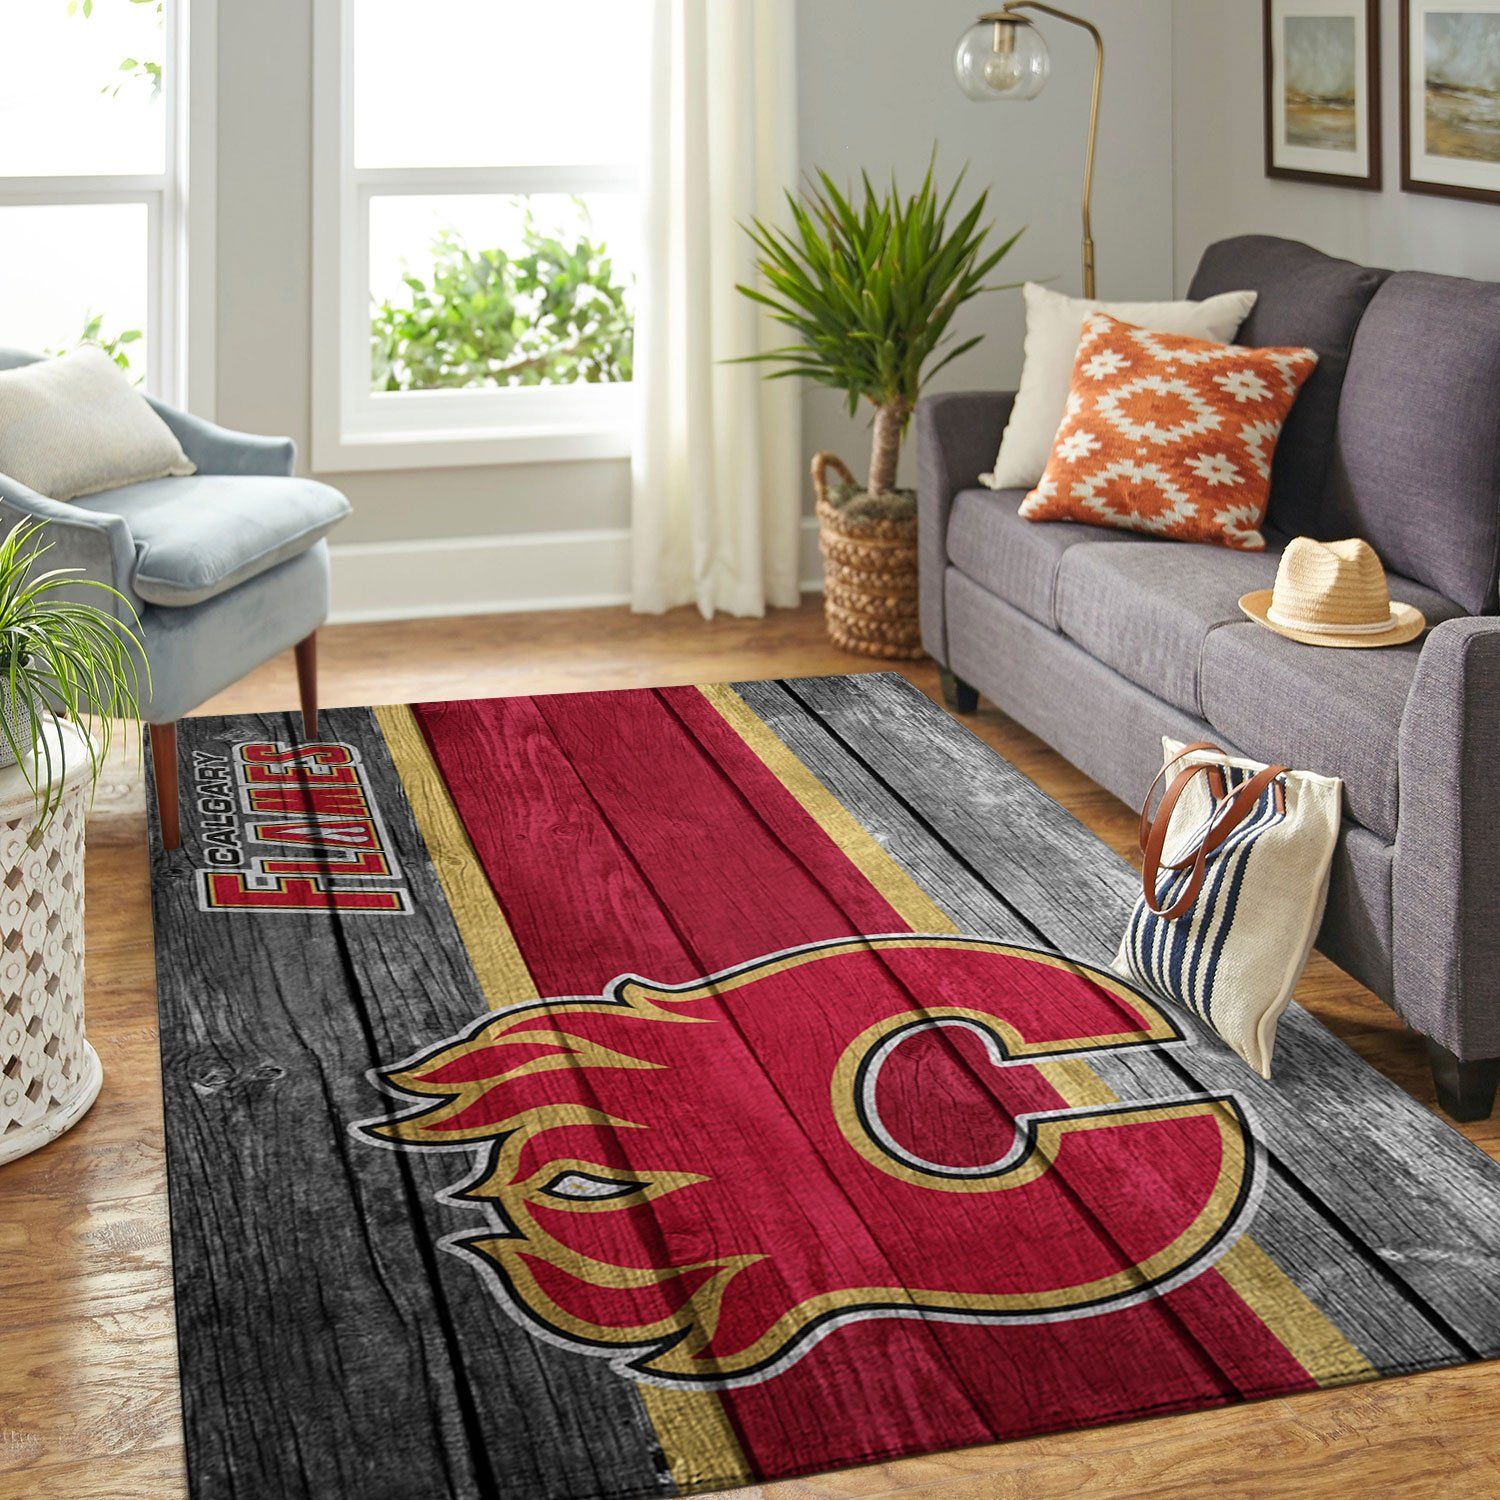 Calgary Flames Nhl Team Logo Wooden Type 7238 Rug Area Carpet Home Decor Living Room